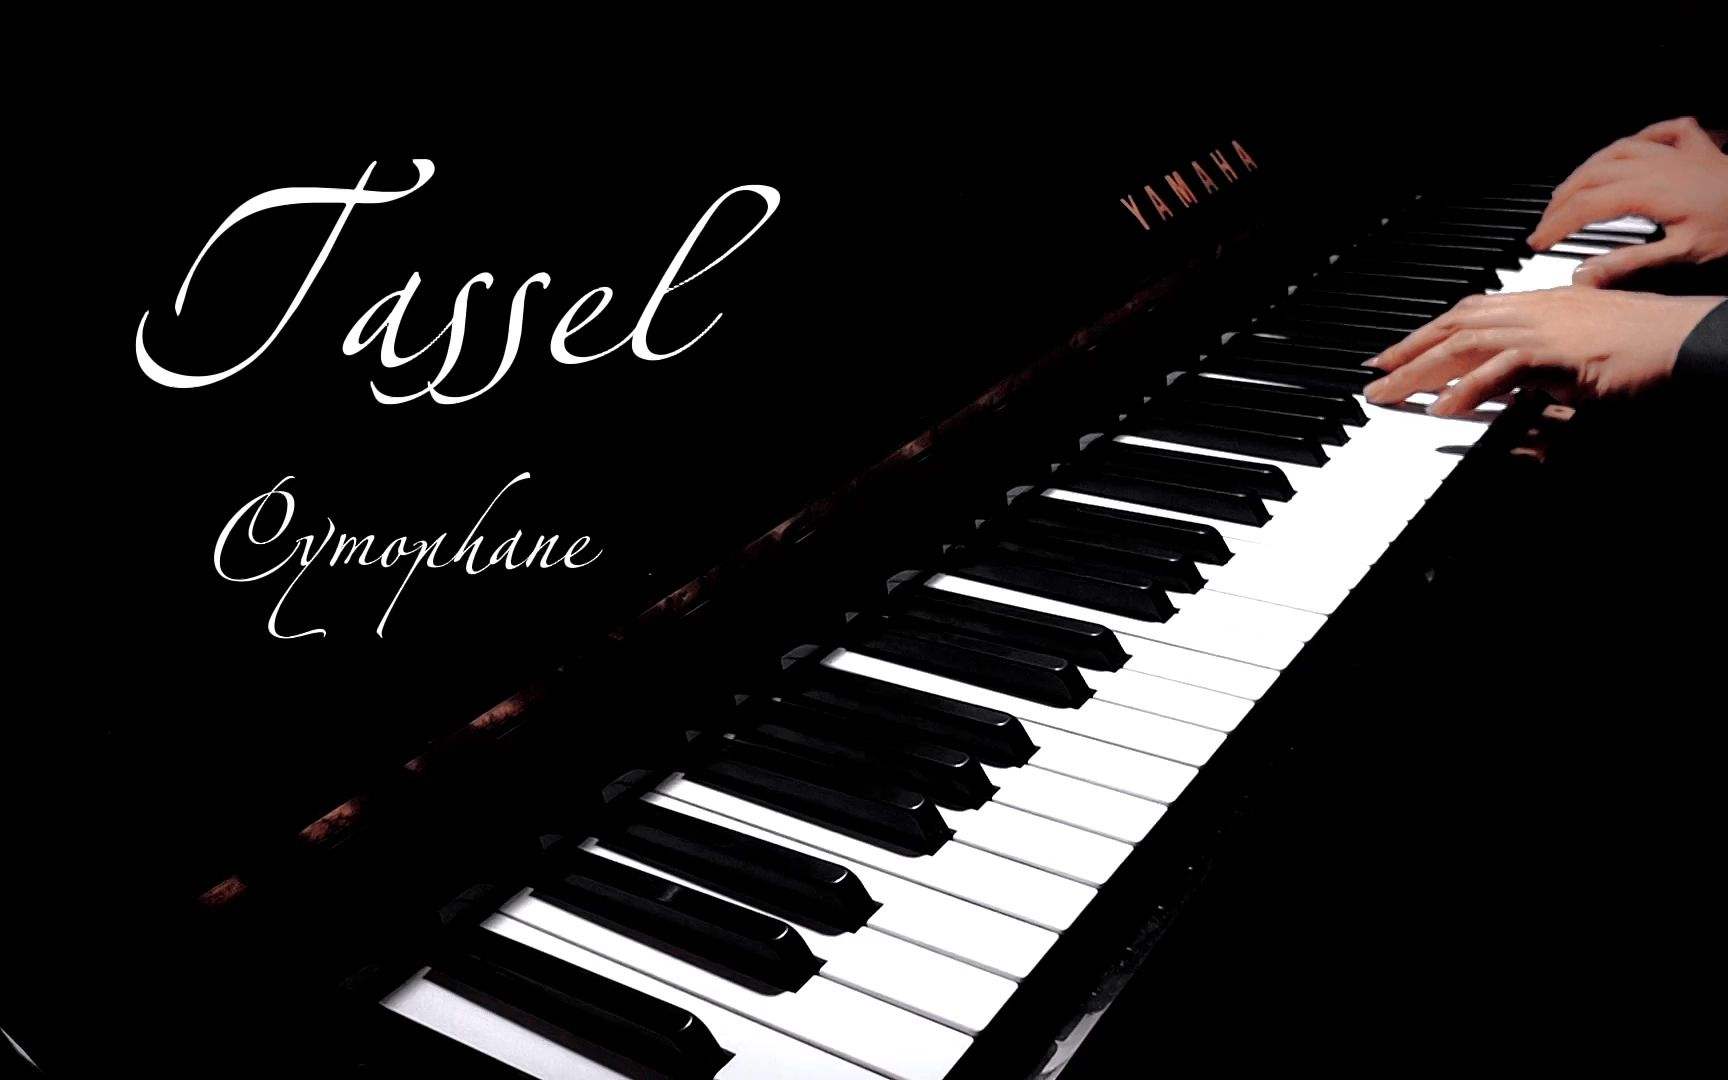 tassel钢琴曲五线谱(tassel钢琴简谱带指法)